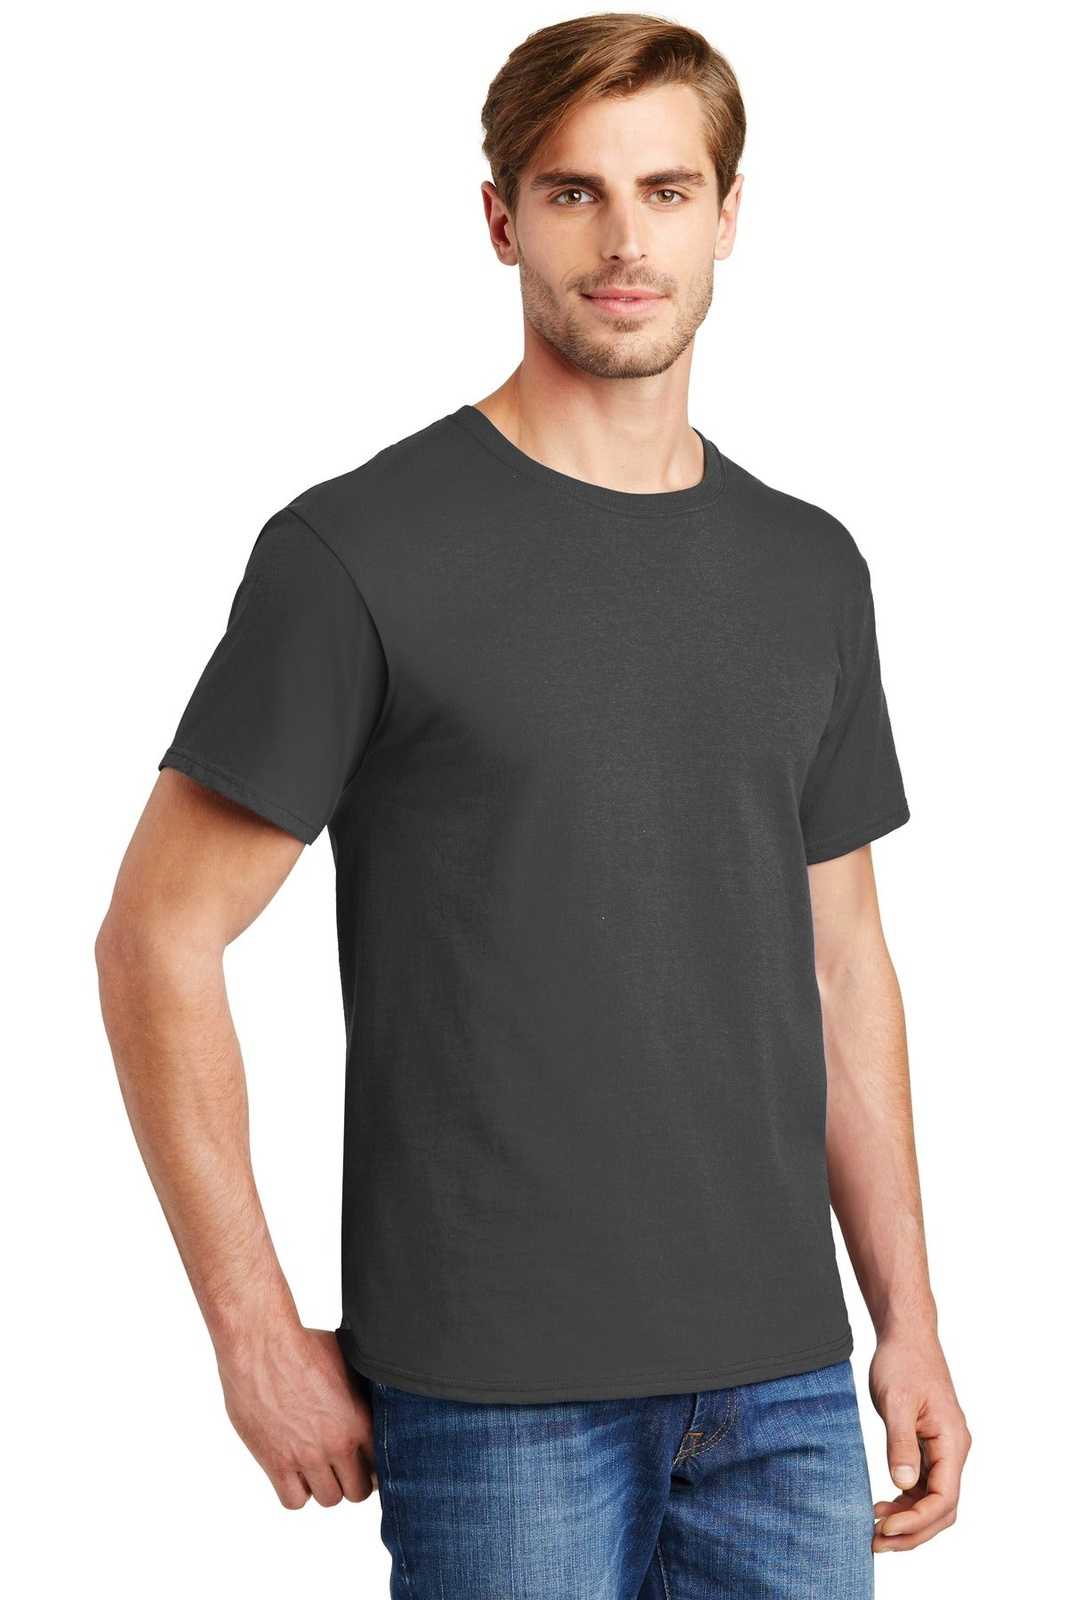 Hanes 5280 ComfortSoft 100% Cotton T-Shirt - Smoke Gray - HIT a Double